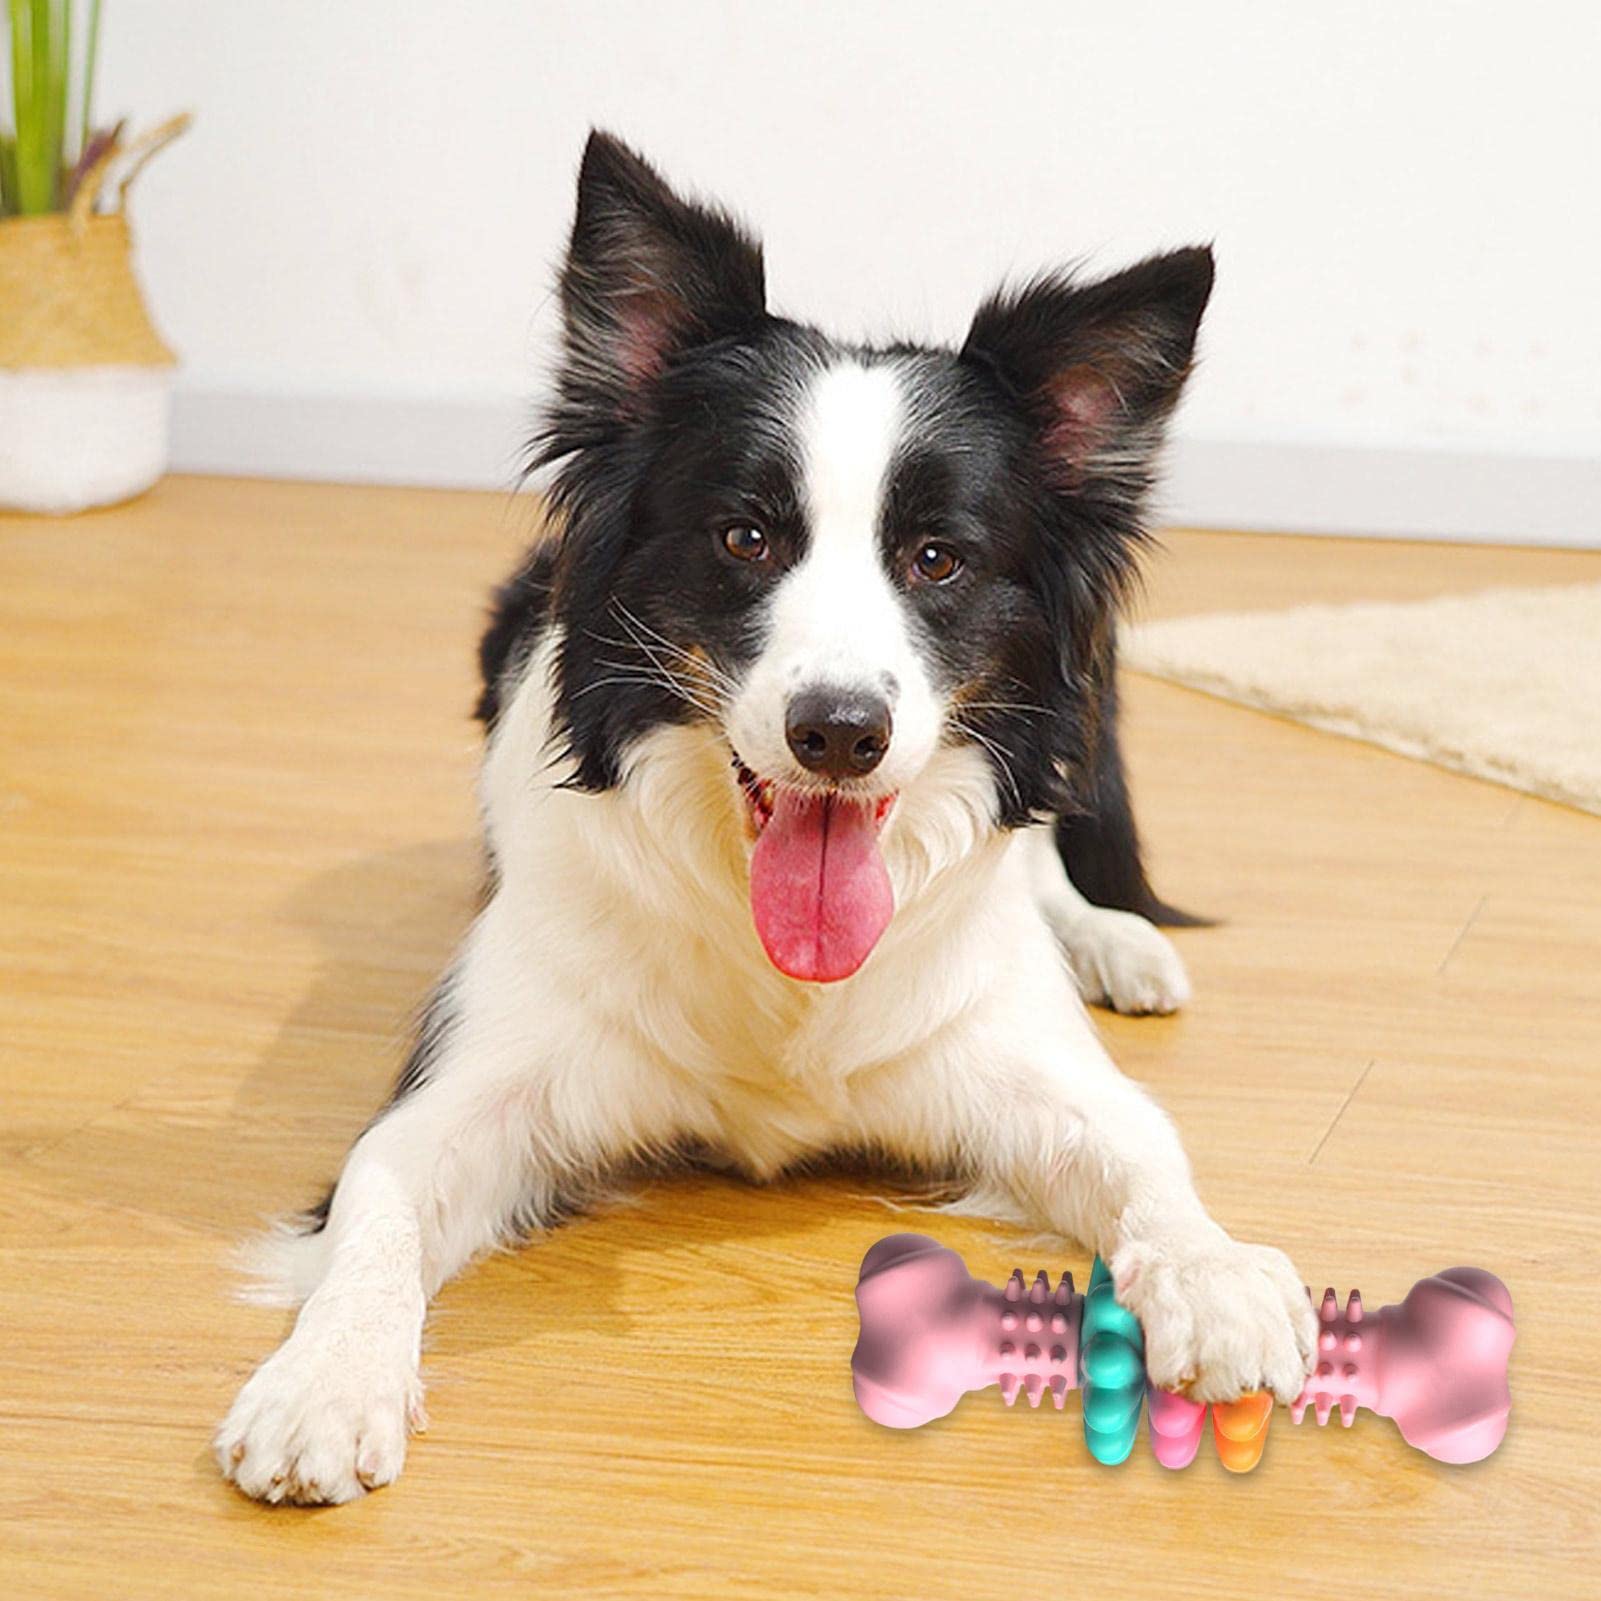 Frozen Pet Toy, Tpr Dog Toy, Pet Chew Toys, Bite-resistant Dog Toy